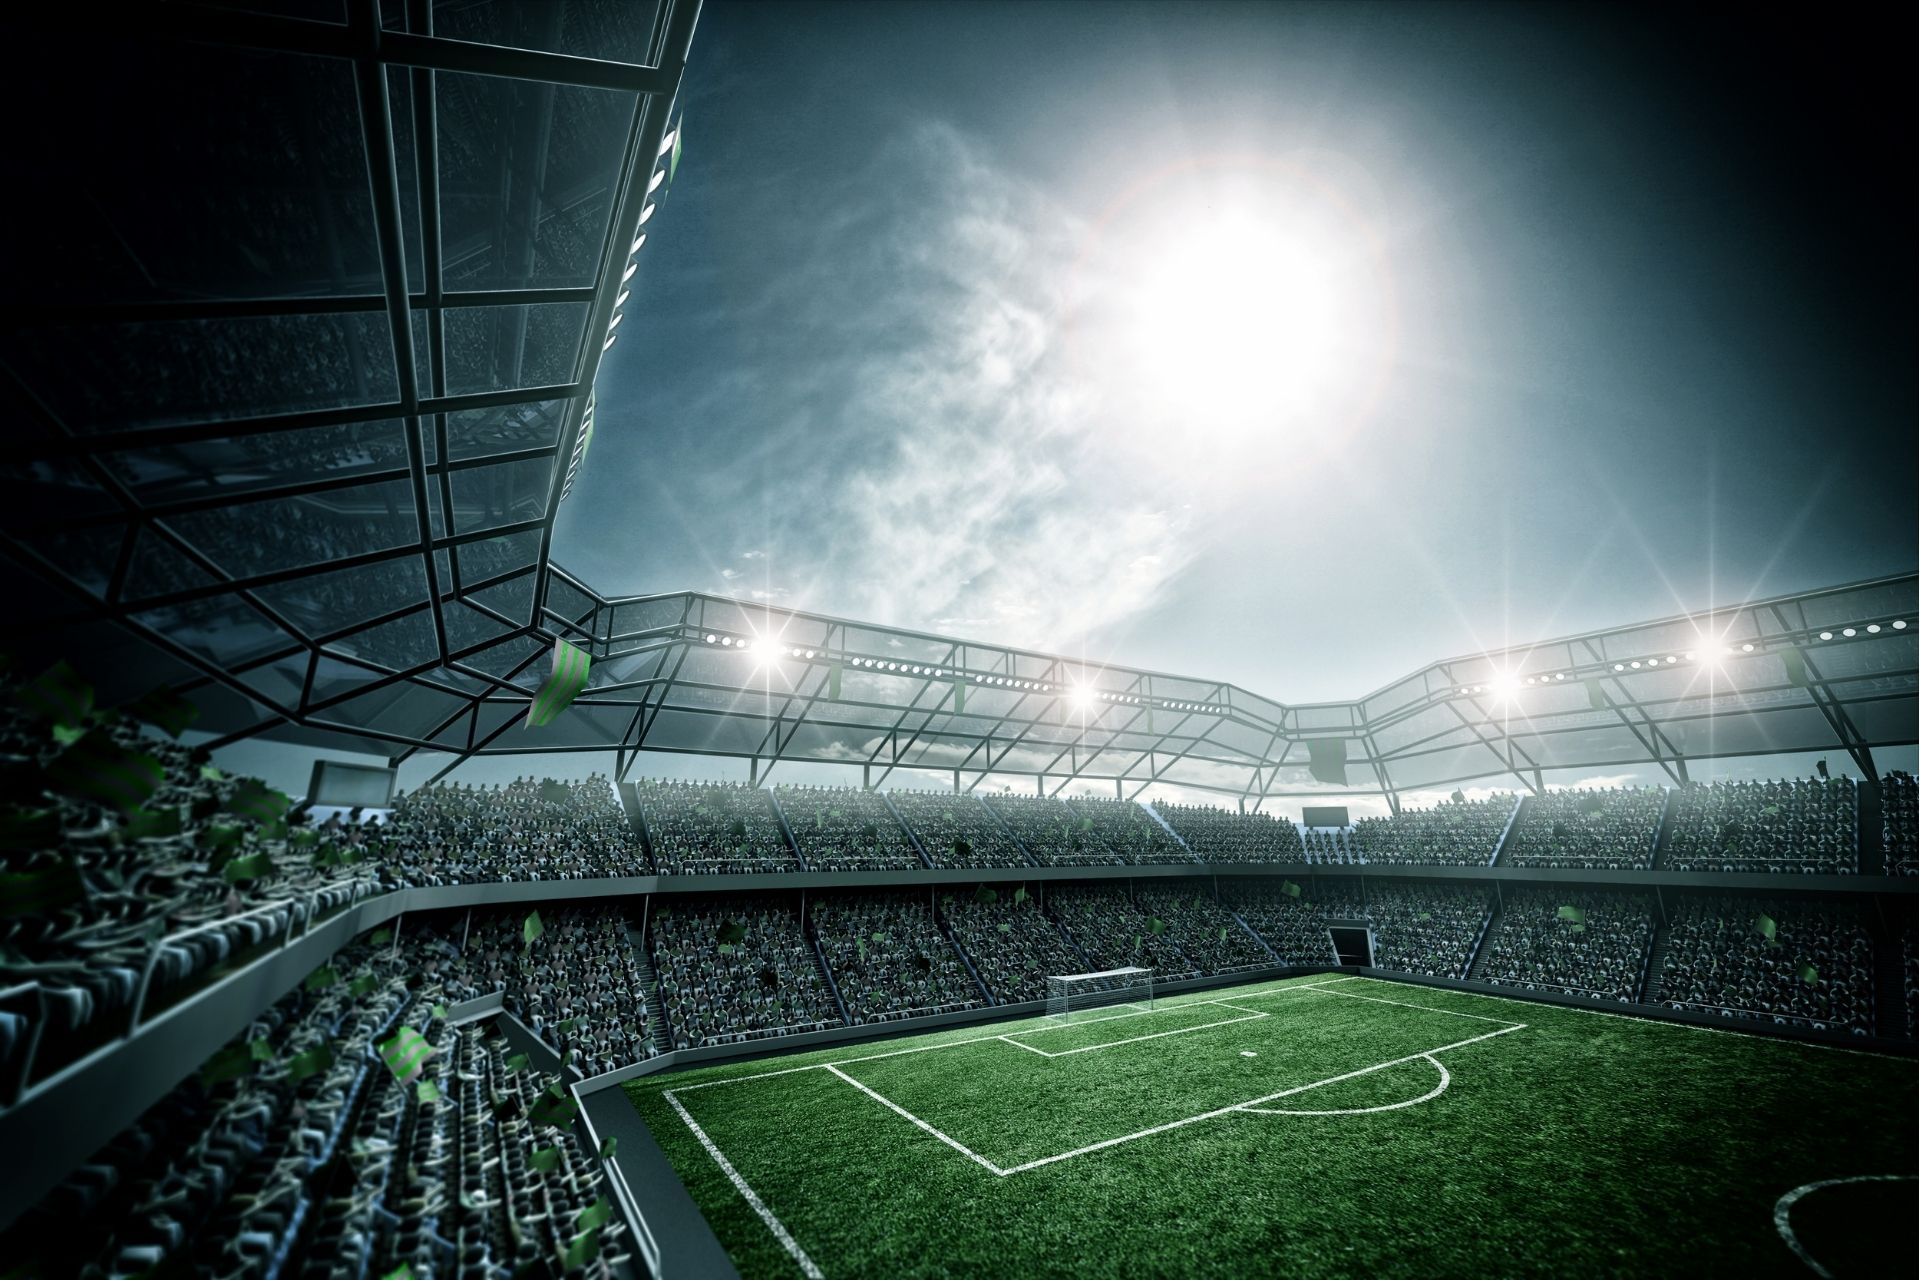 Mecz Waalwijk kontra GO Ahead Eagles na stadionie Mandemakers Stadion dnia 2021-10-02 16:45: wynik 1-1